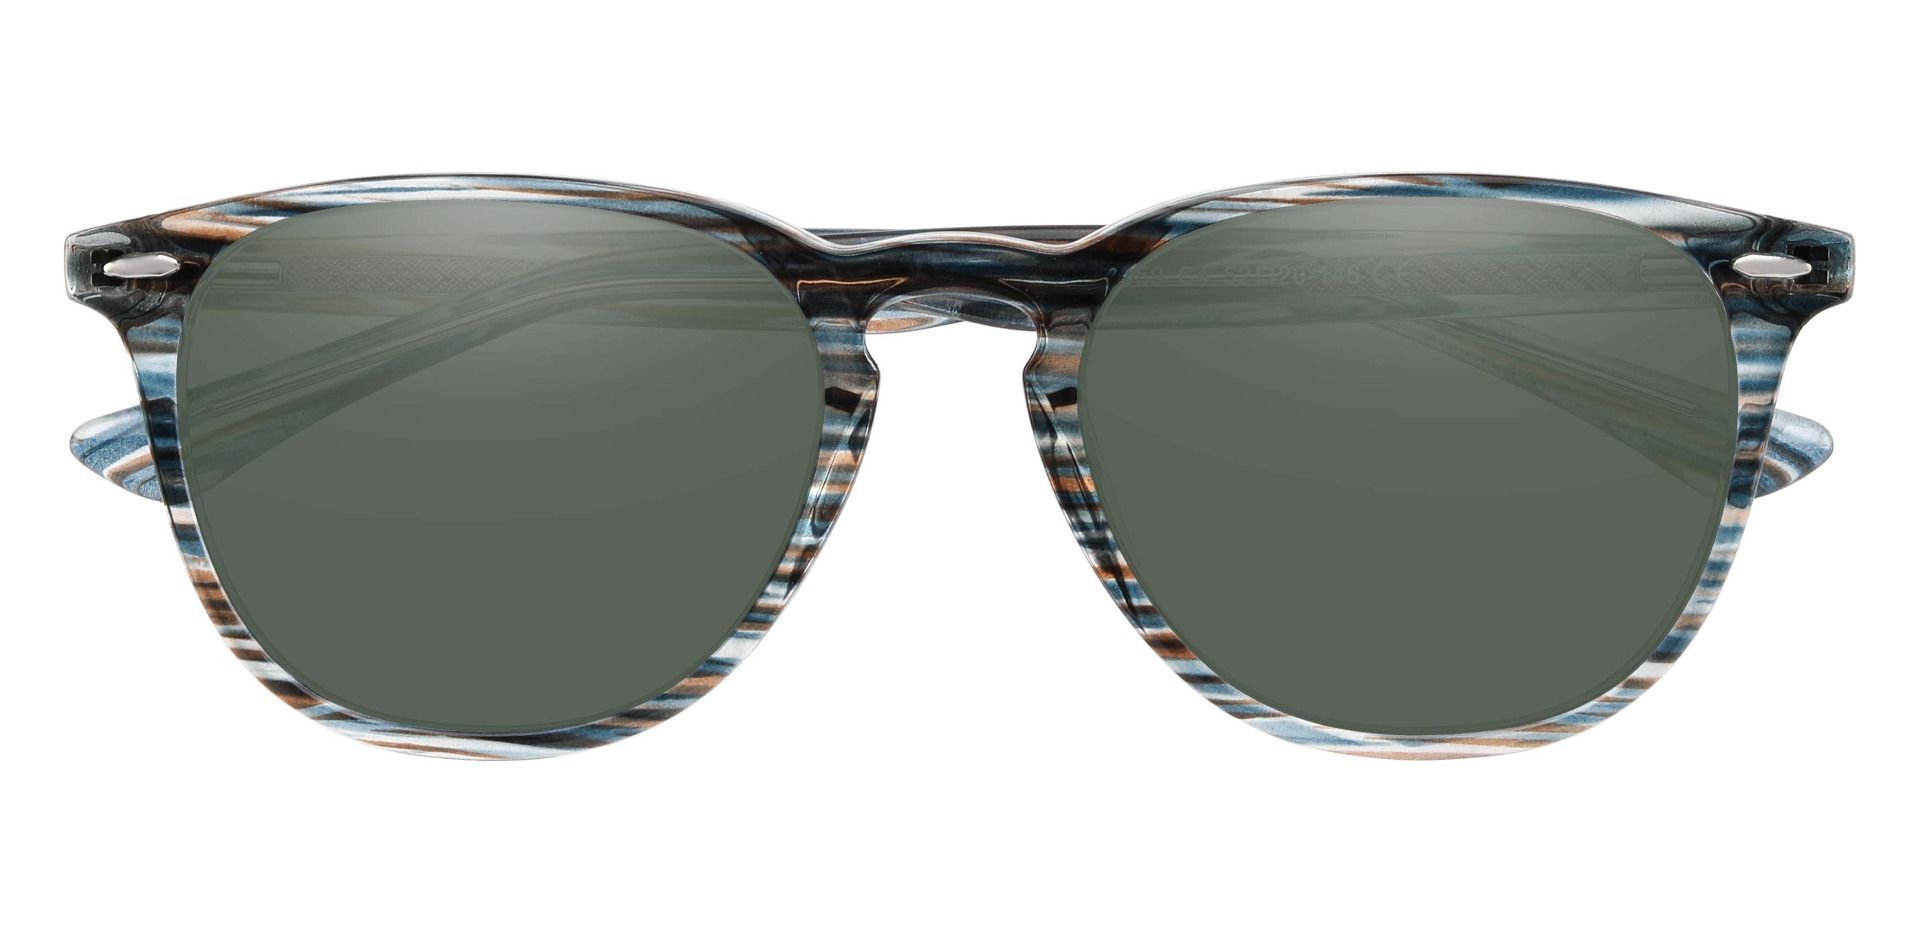 Sycamore Oval Prescription Sunglasses - Blue Frame With Green Lenses